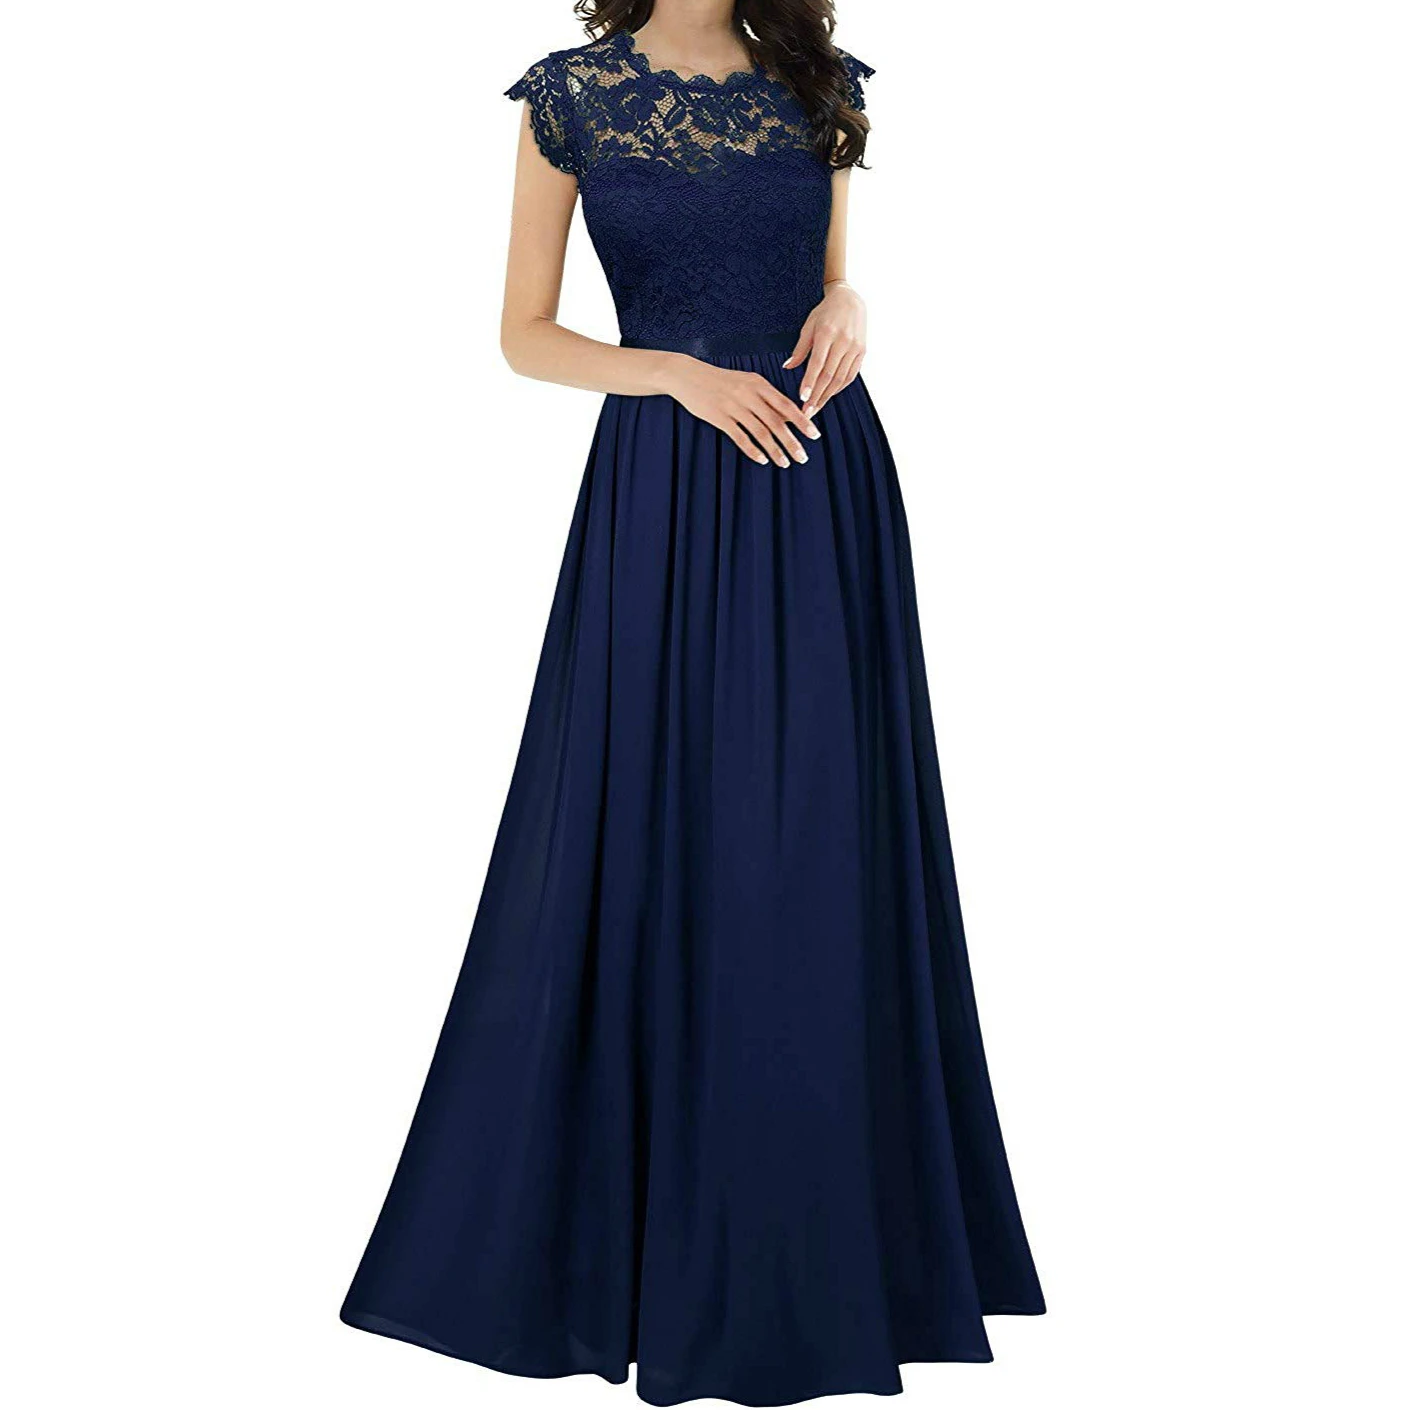 Women's Elegant Vintage Floral Lace Hollow out Chiffon Long Evening Party Dress Formal Maxi Dresses shirt dress